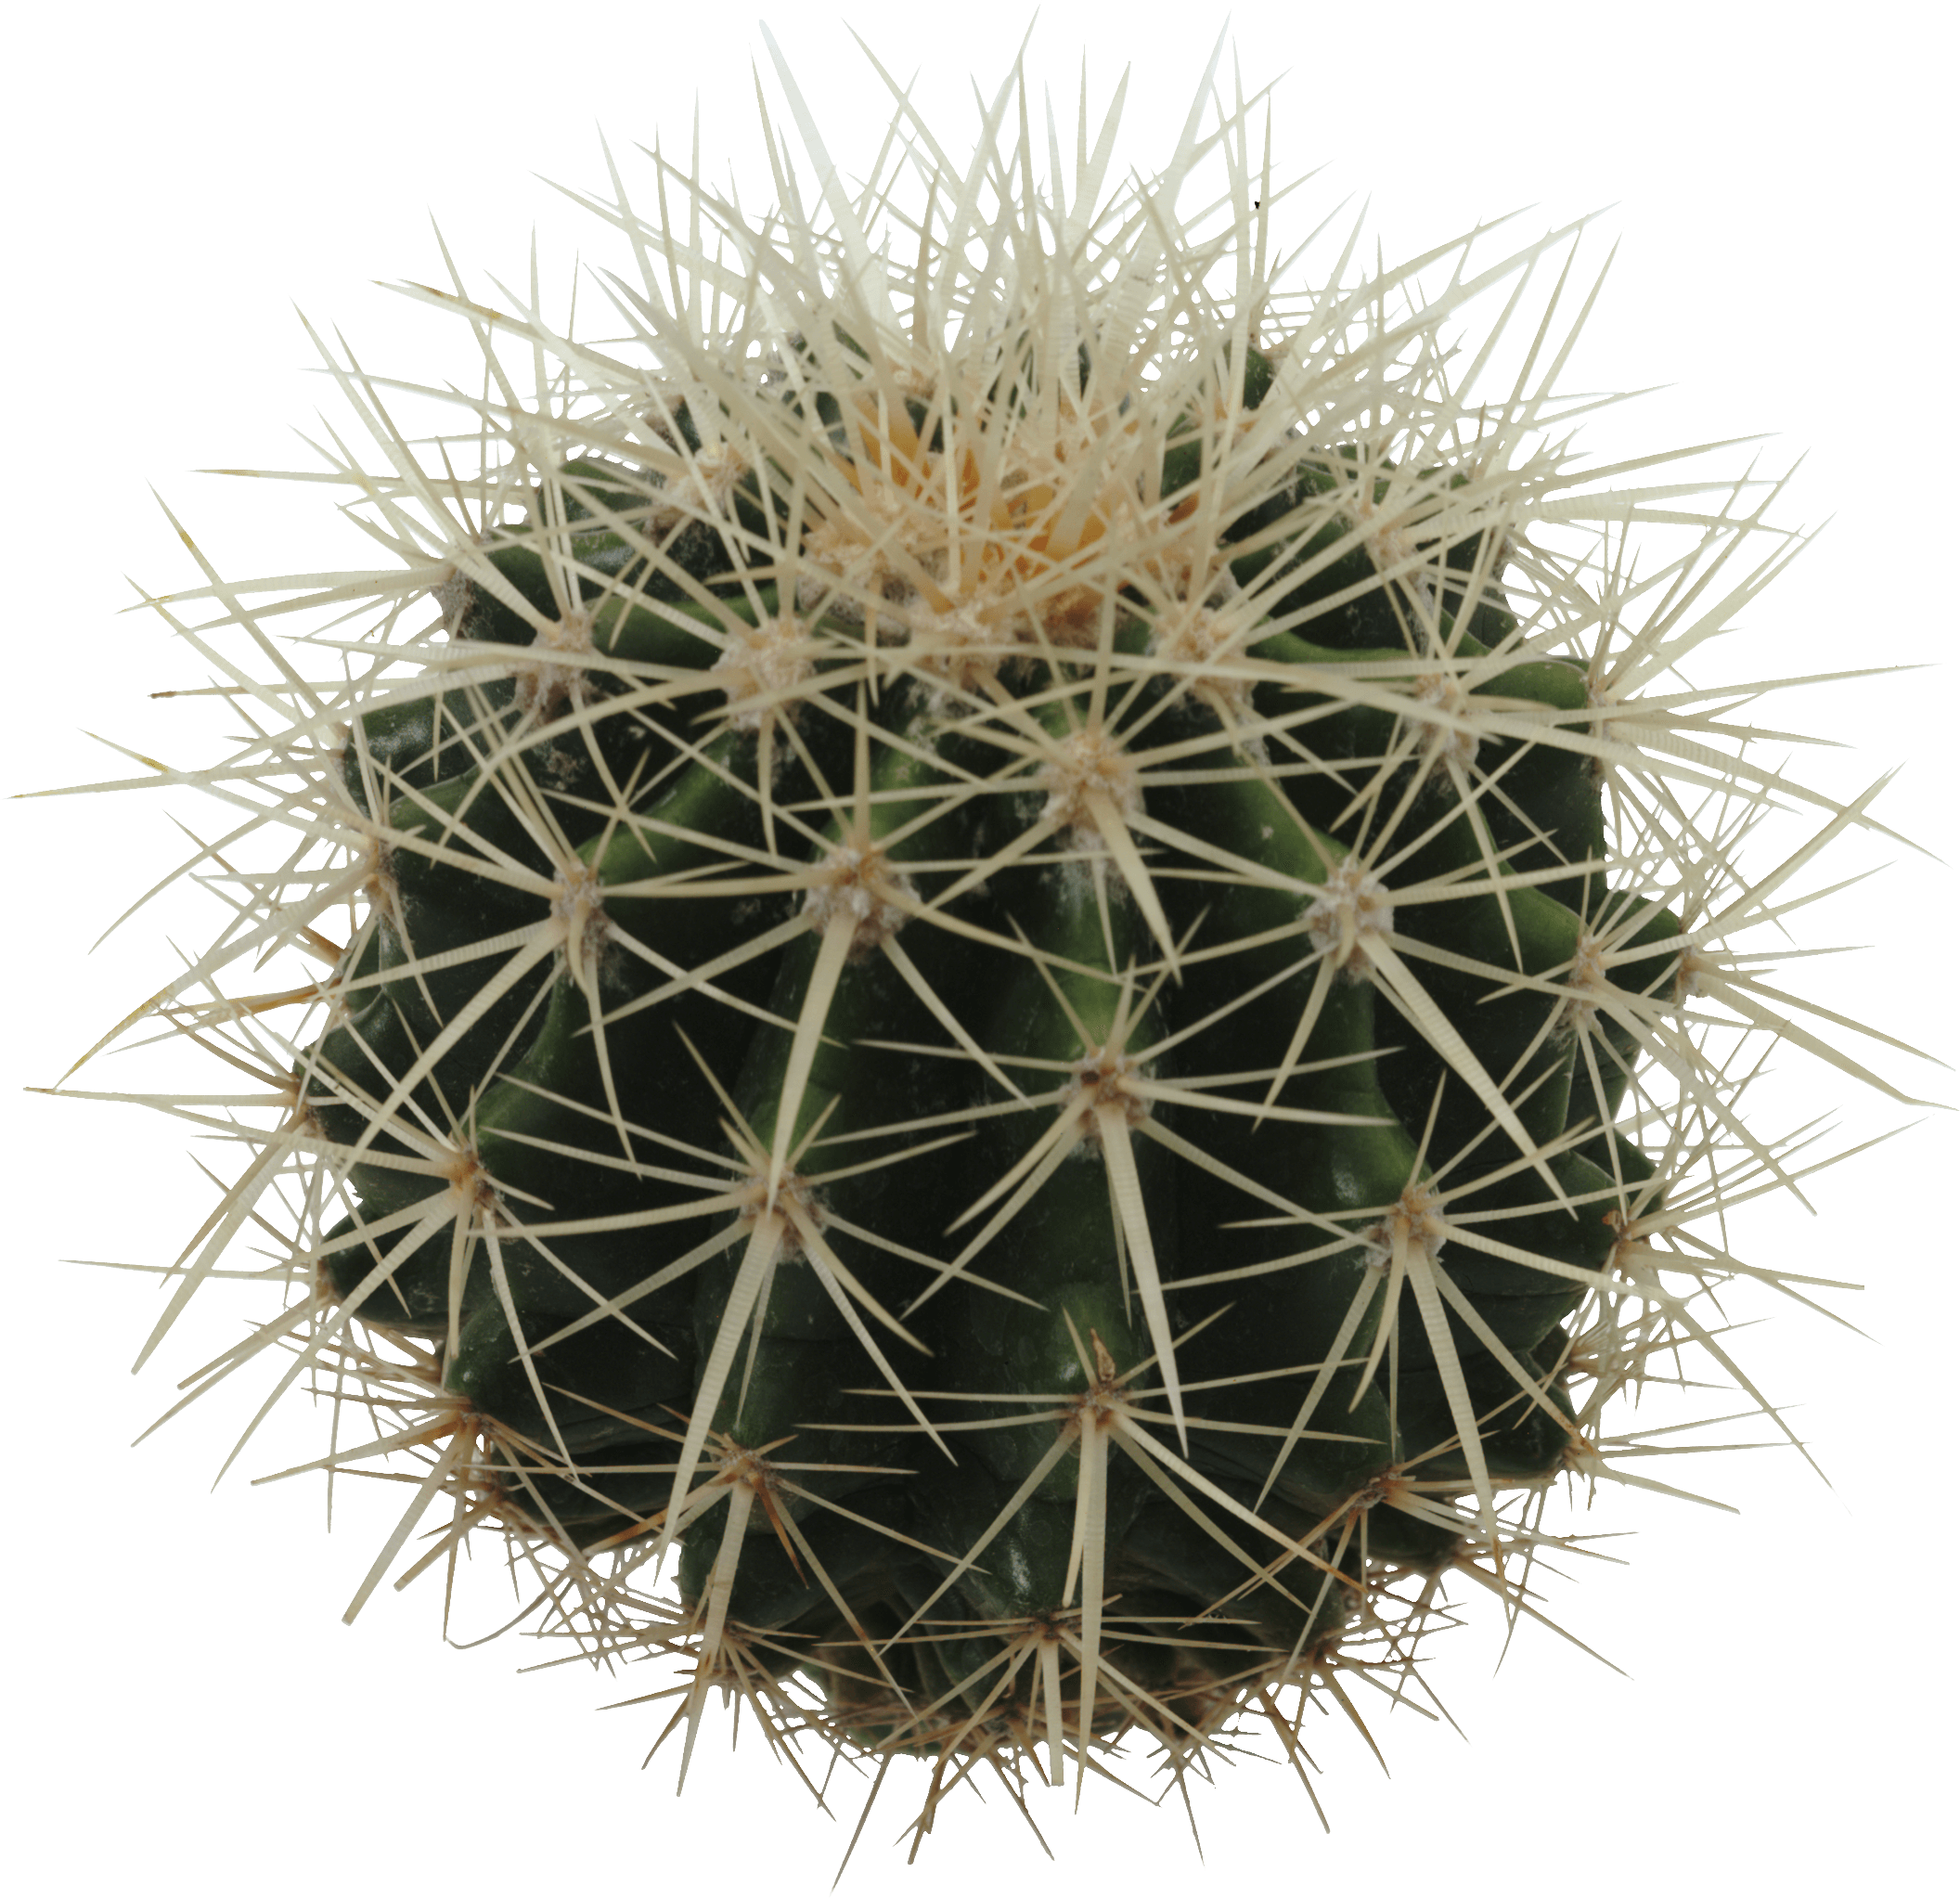 Cactus Png Image PNG Image